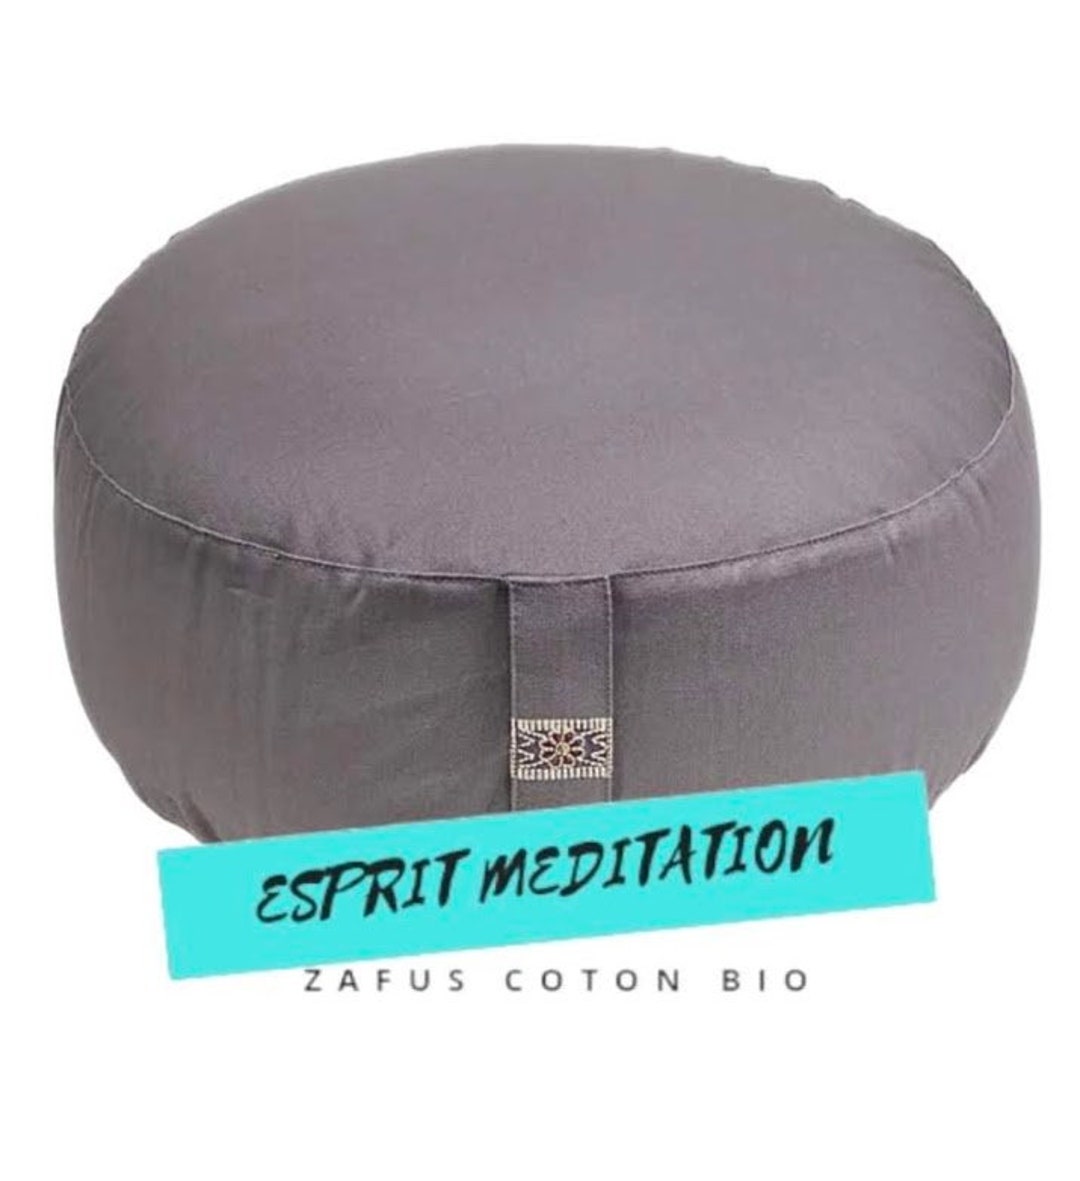 Meditation Cushion Zafu Organic Coton Buckwheats Yoga Relaxation Reiki  Holistic Vipassana Nidra Mindfulness Zen Tibet Japan India Zazen 